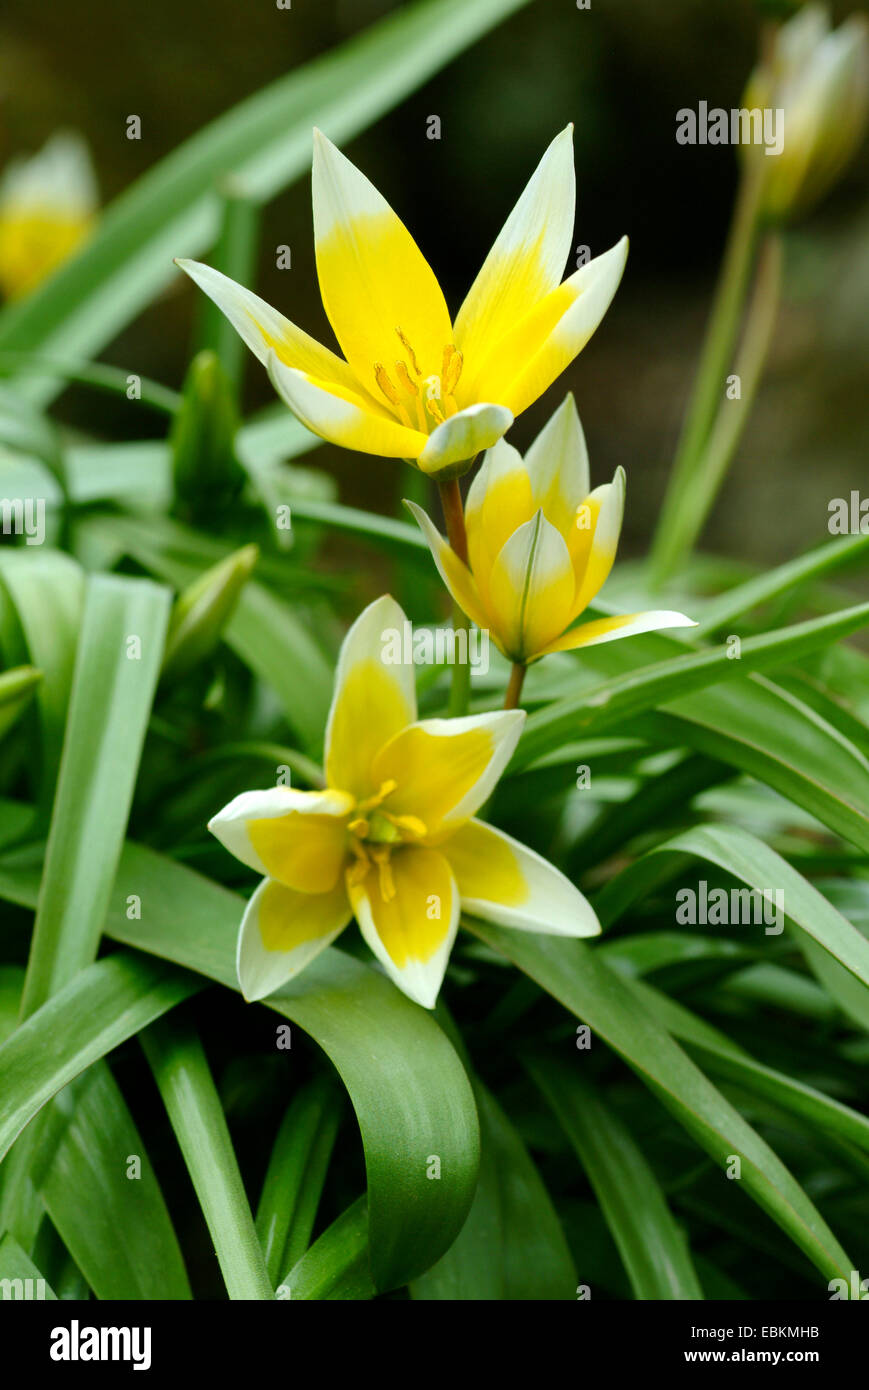 Late tulip, Tarda tulip (Tulipa tarda), blooming Stock Photo